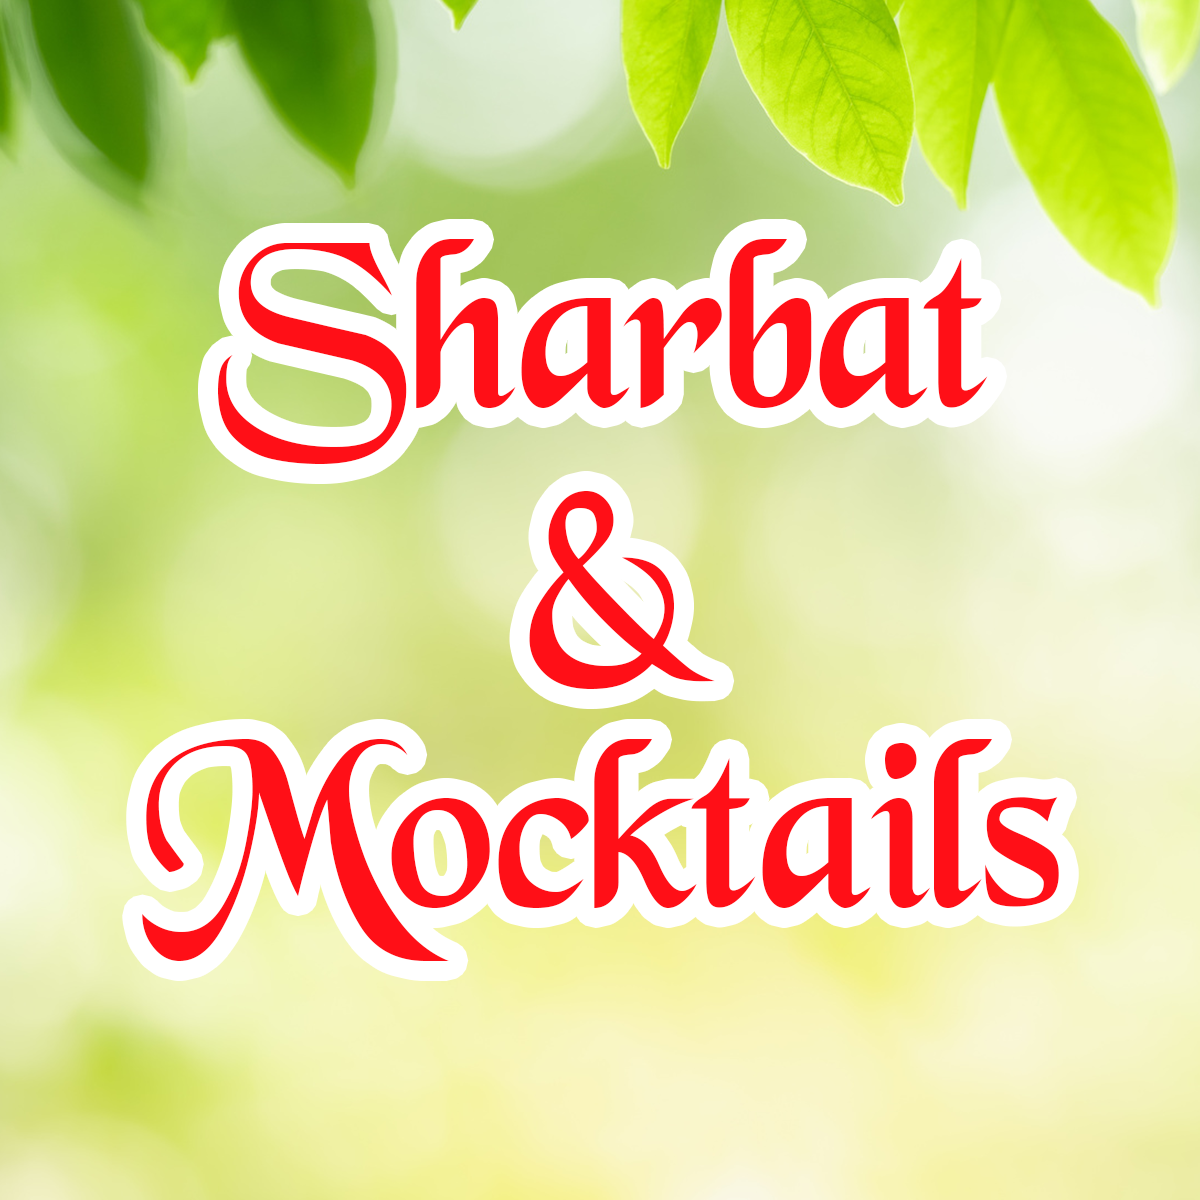 Sharbat & Mocktails